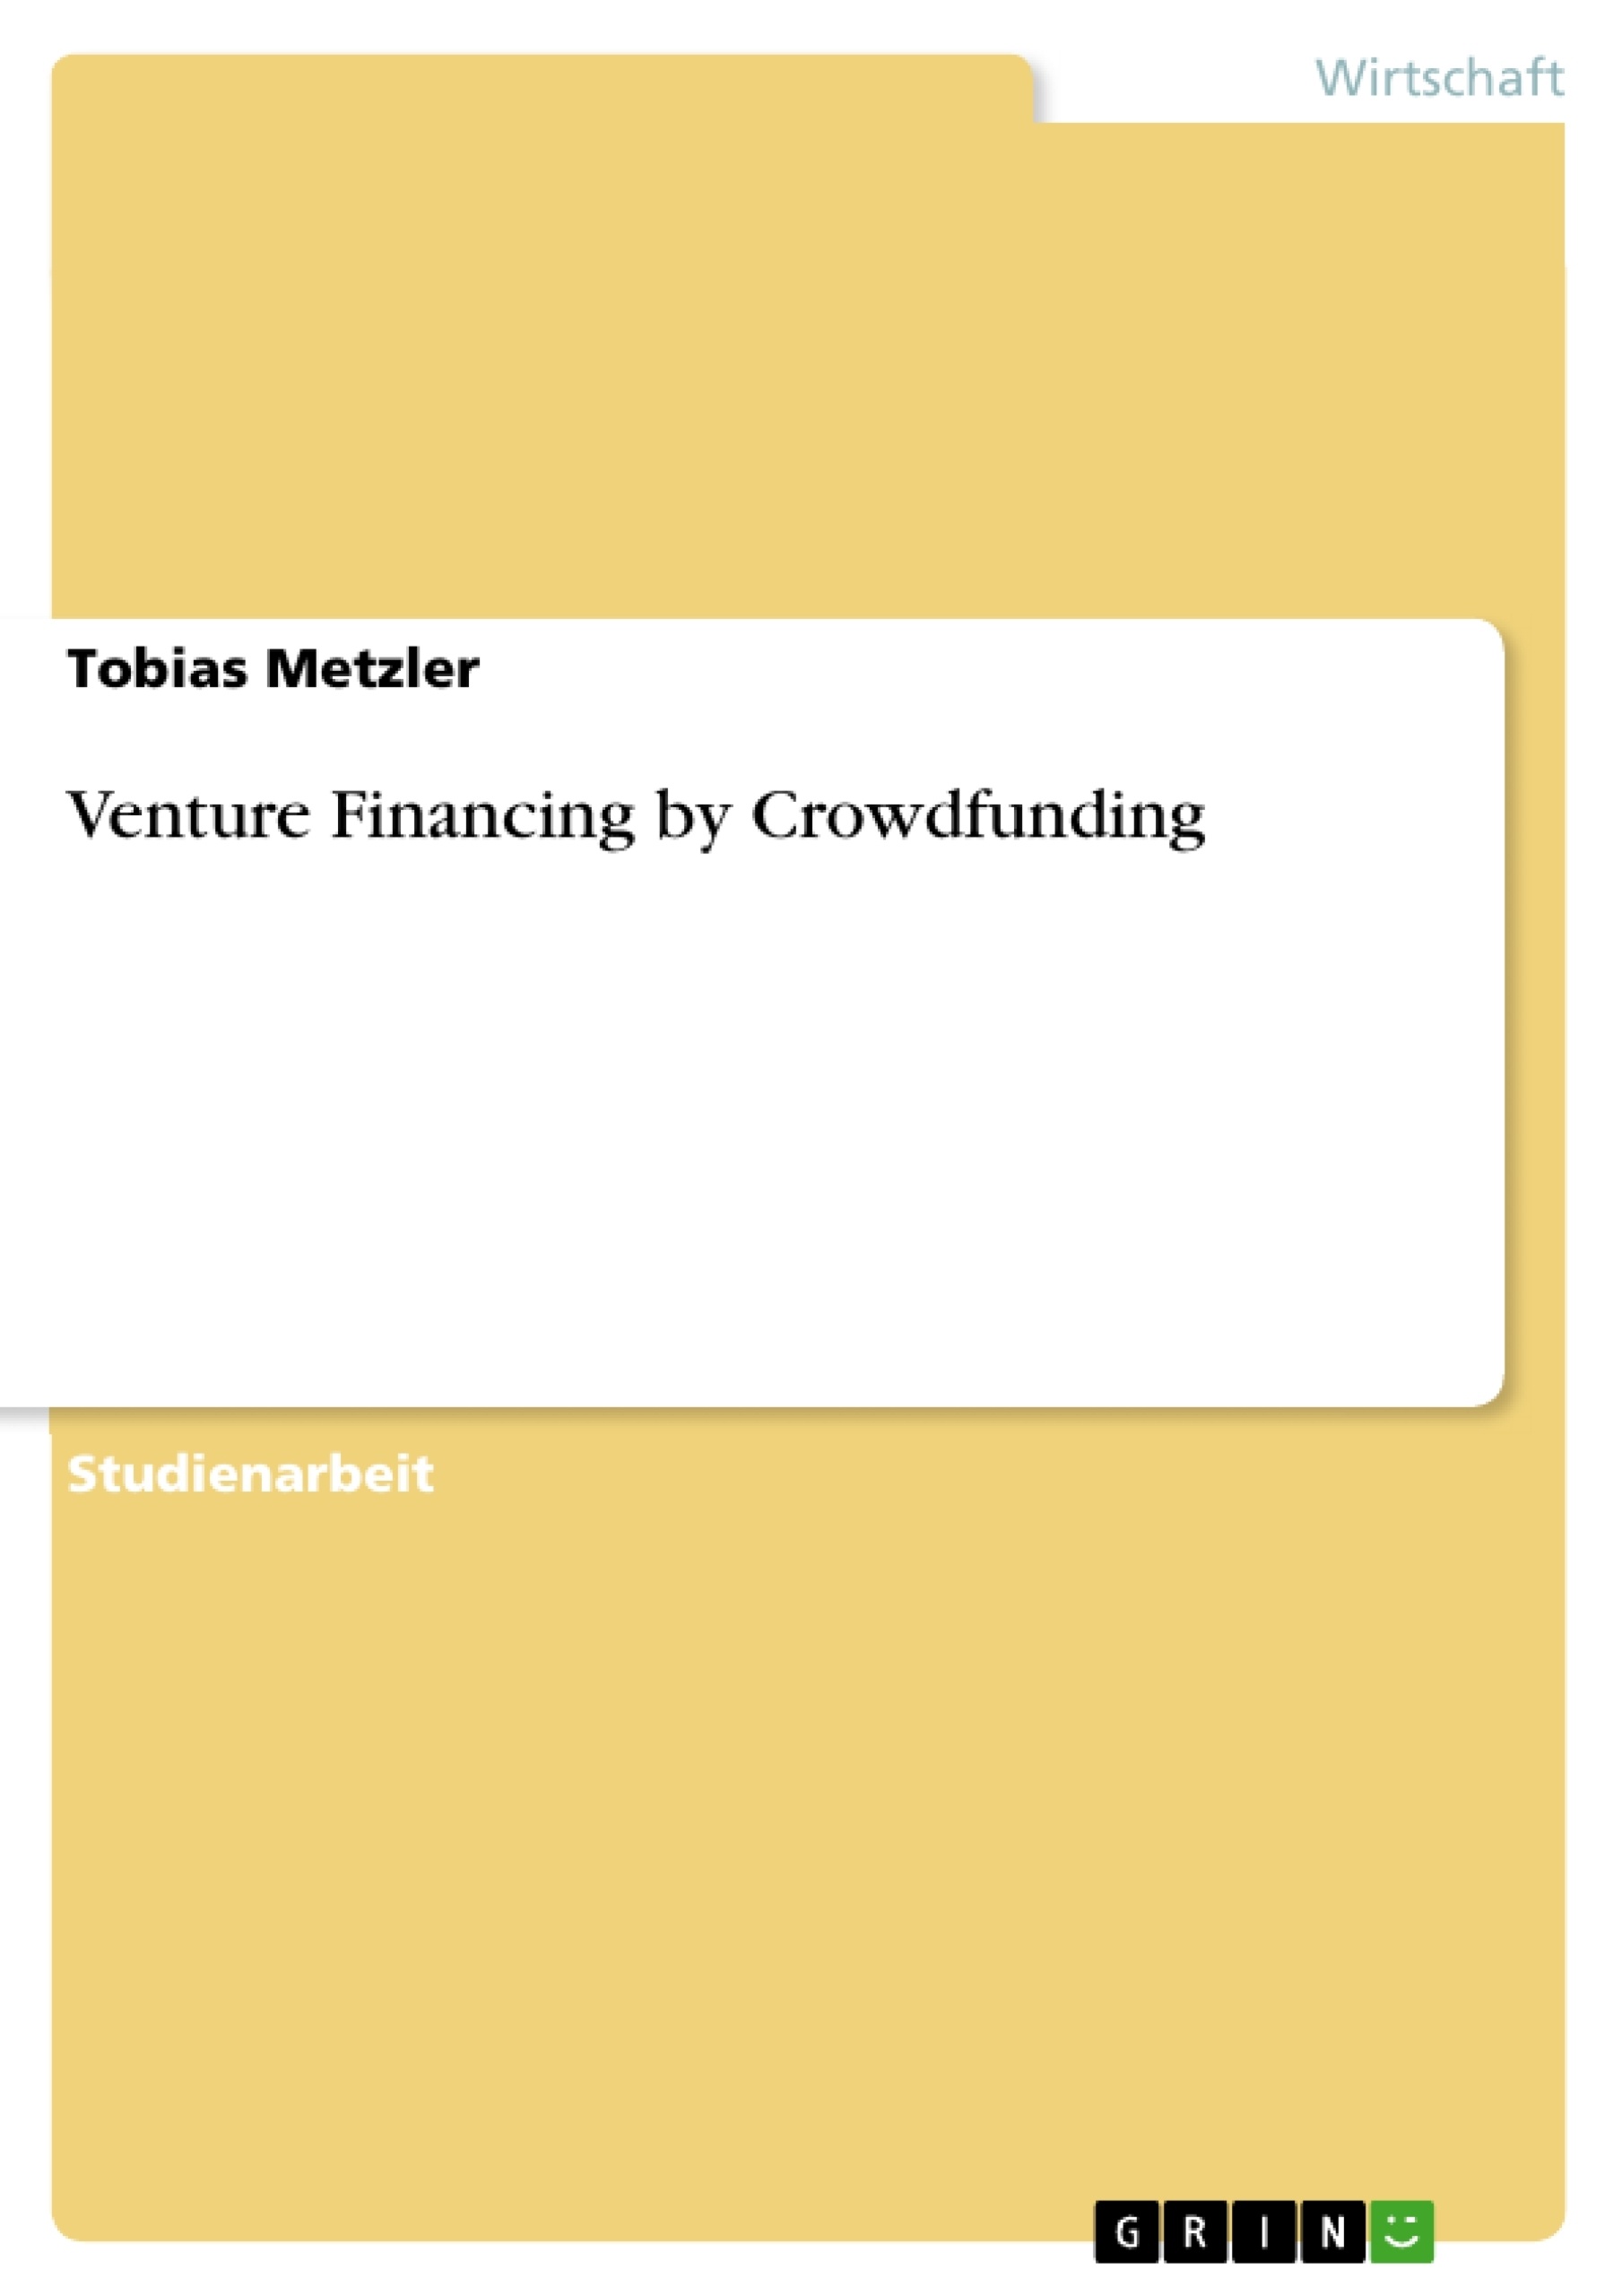 Titel: Venture Financing by Crowdfunding